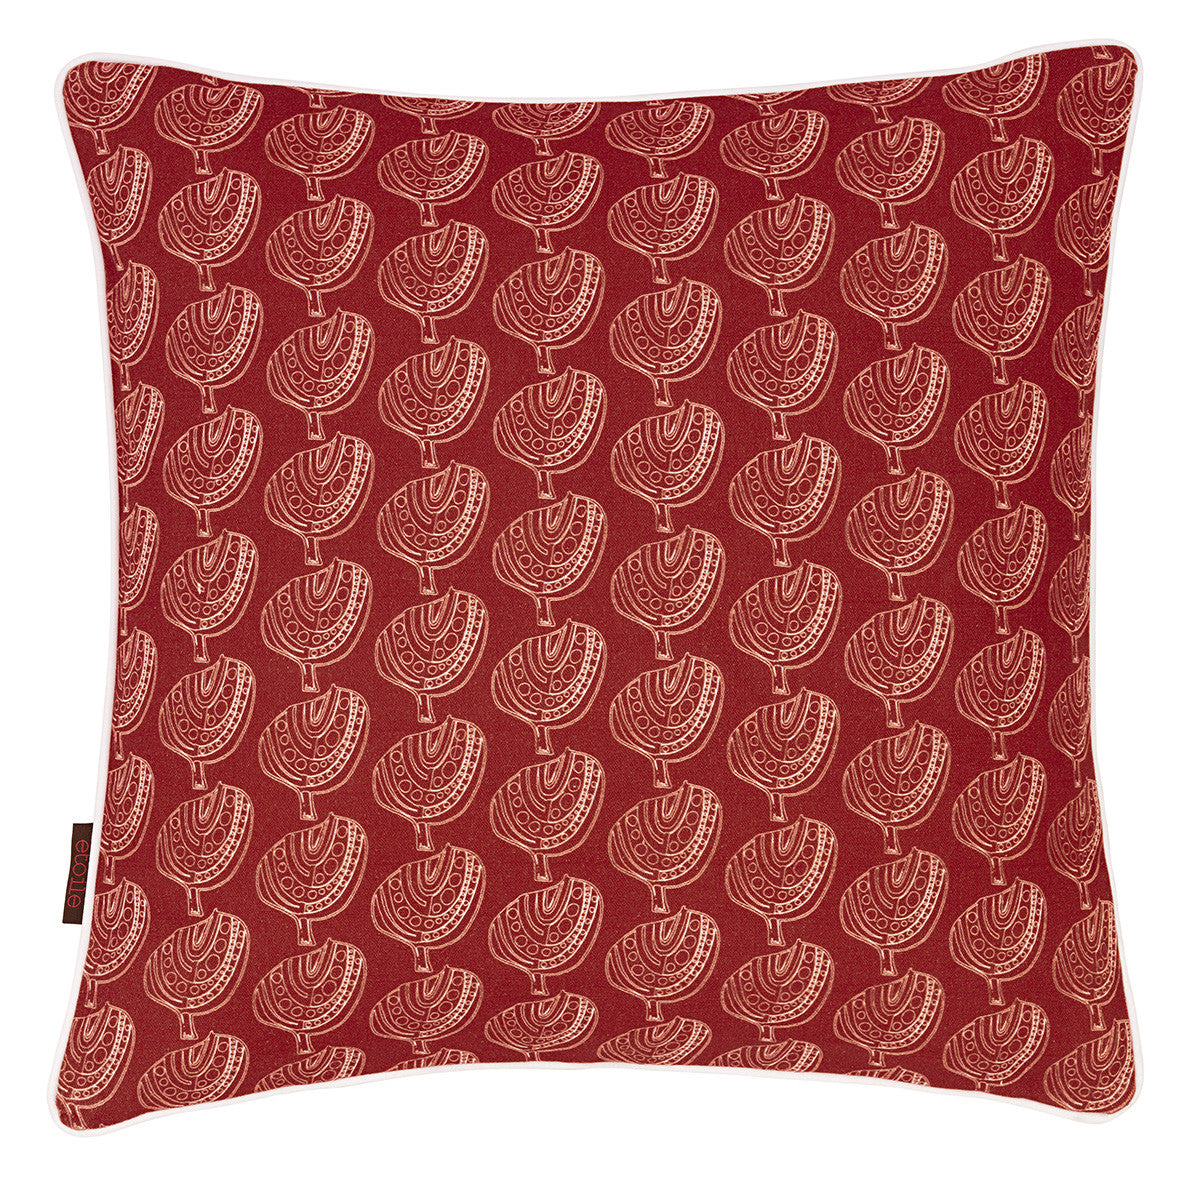 Graphic Tree Pattern Printed Linen Union Decorative Throw Pillow in Warm Geranium Orange-Red 45x45cm (18x18")